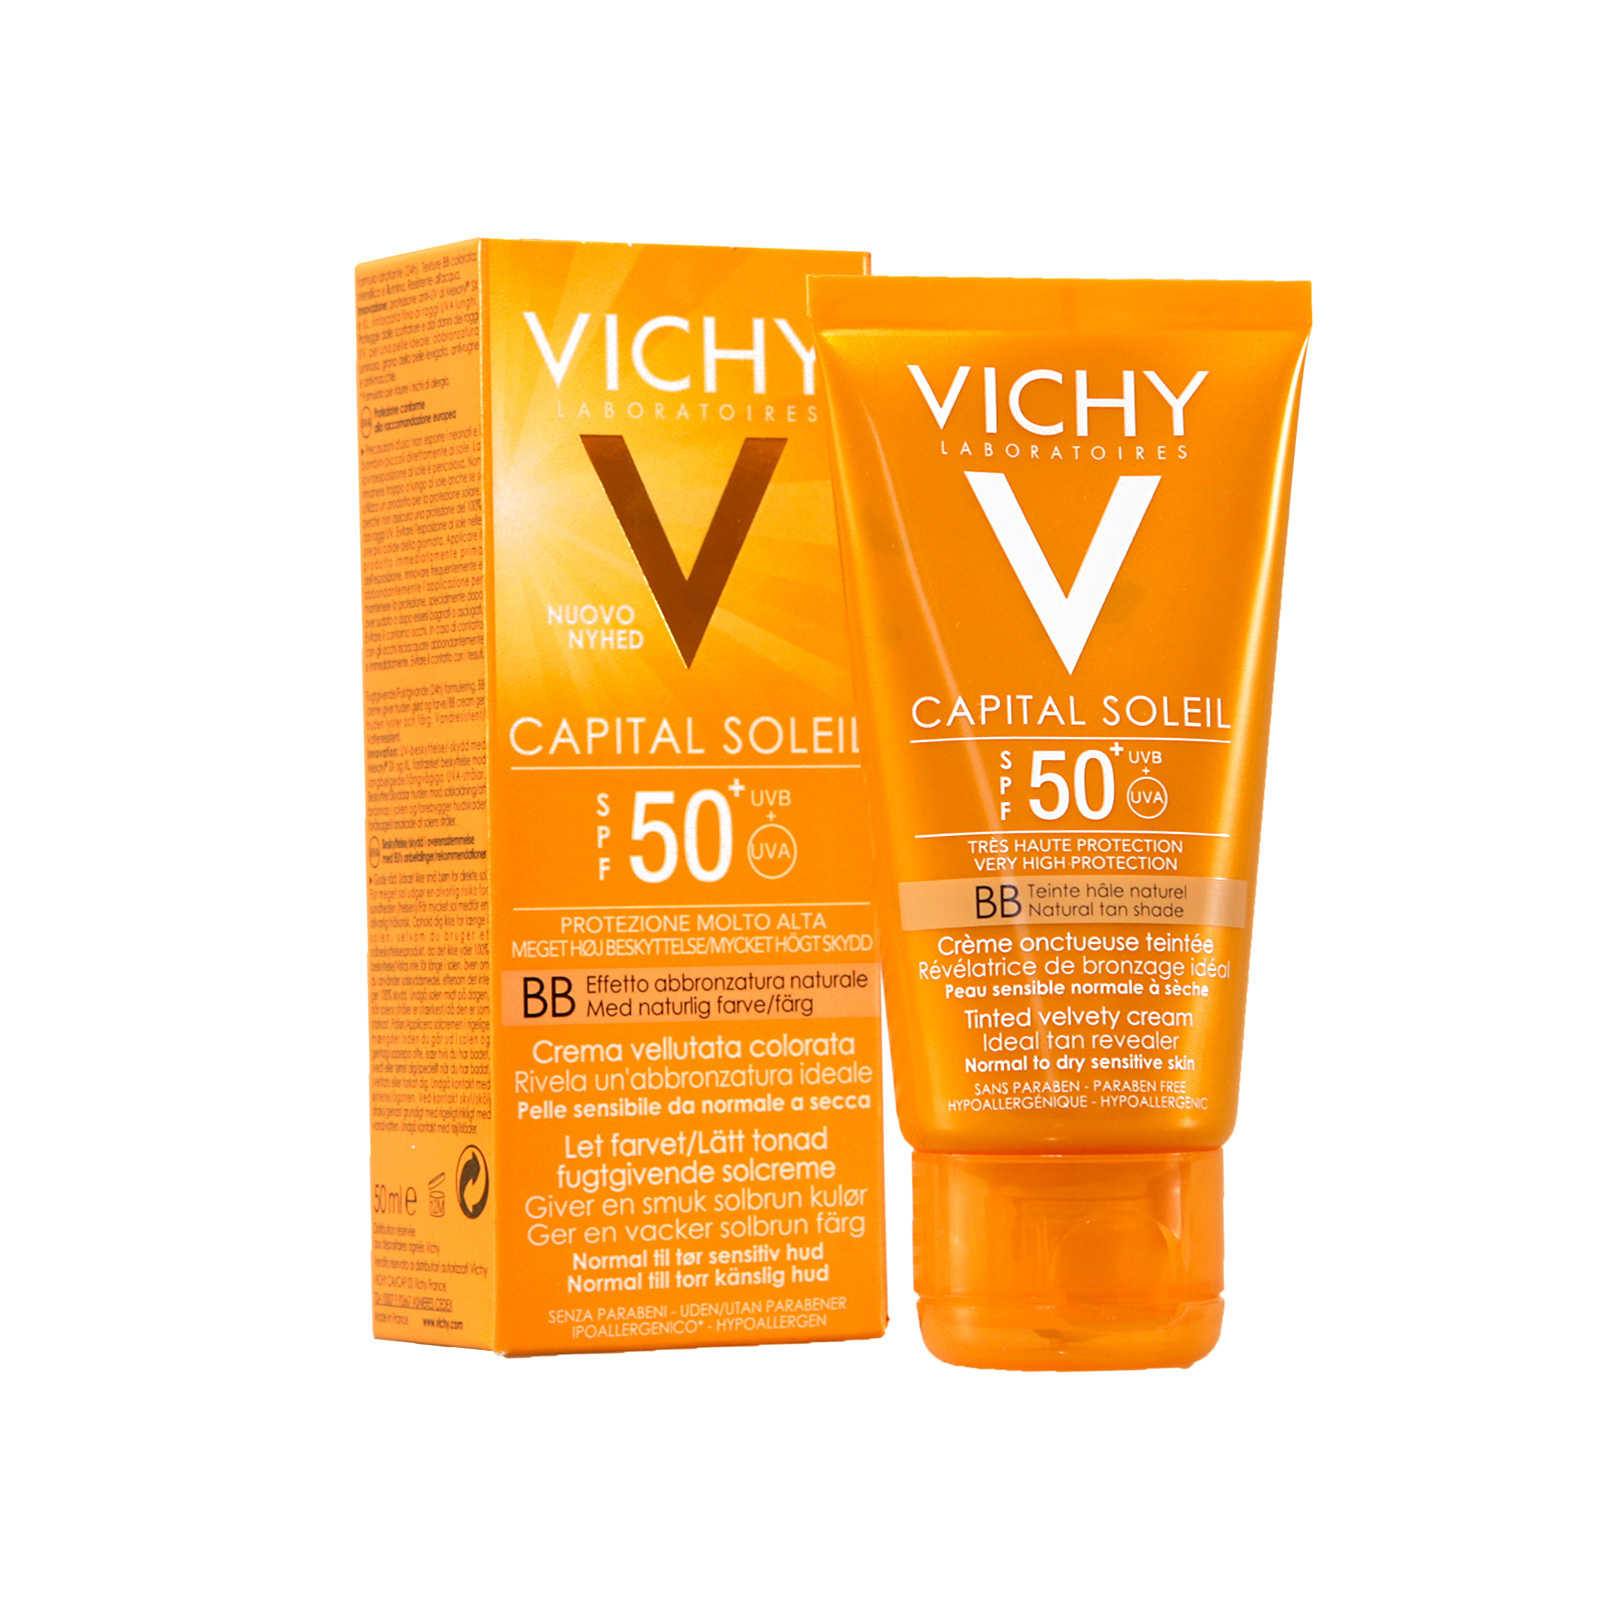 Крем для лица spf 50 vichy. Vichy SPF 50. Vichy СПФ 50. Vichy Capital Soleil SPF 50. Cc Vichy.